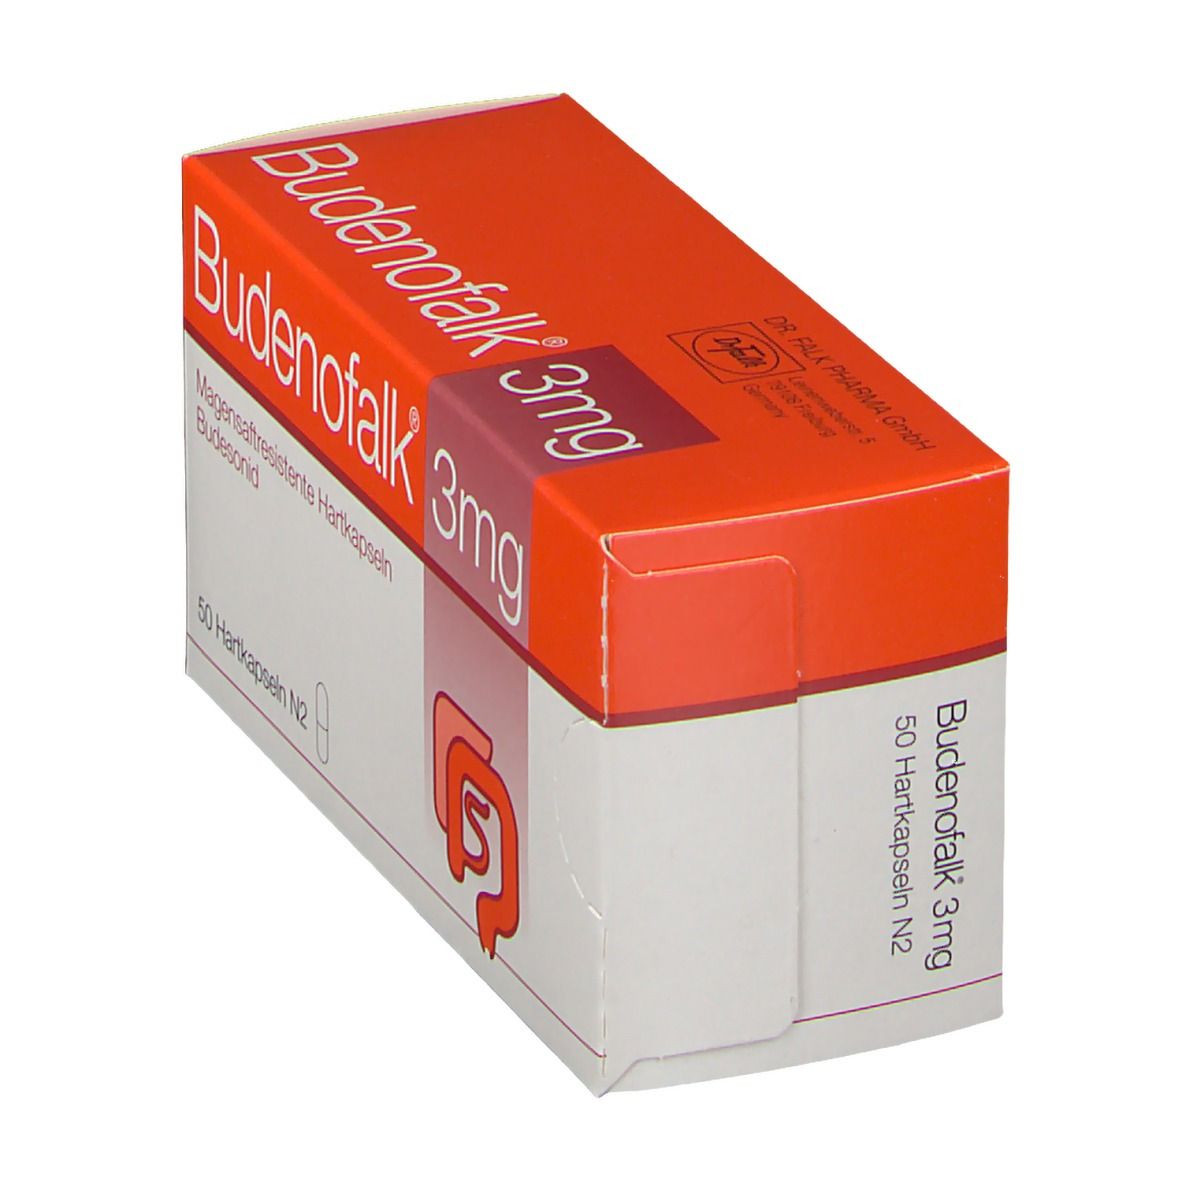 Budenofalk® 3 mg